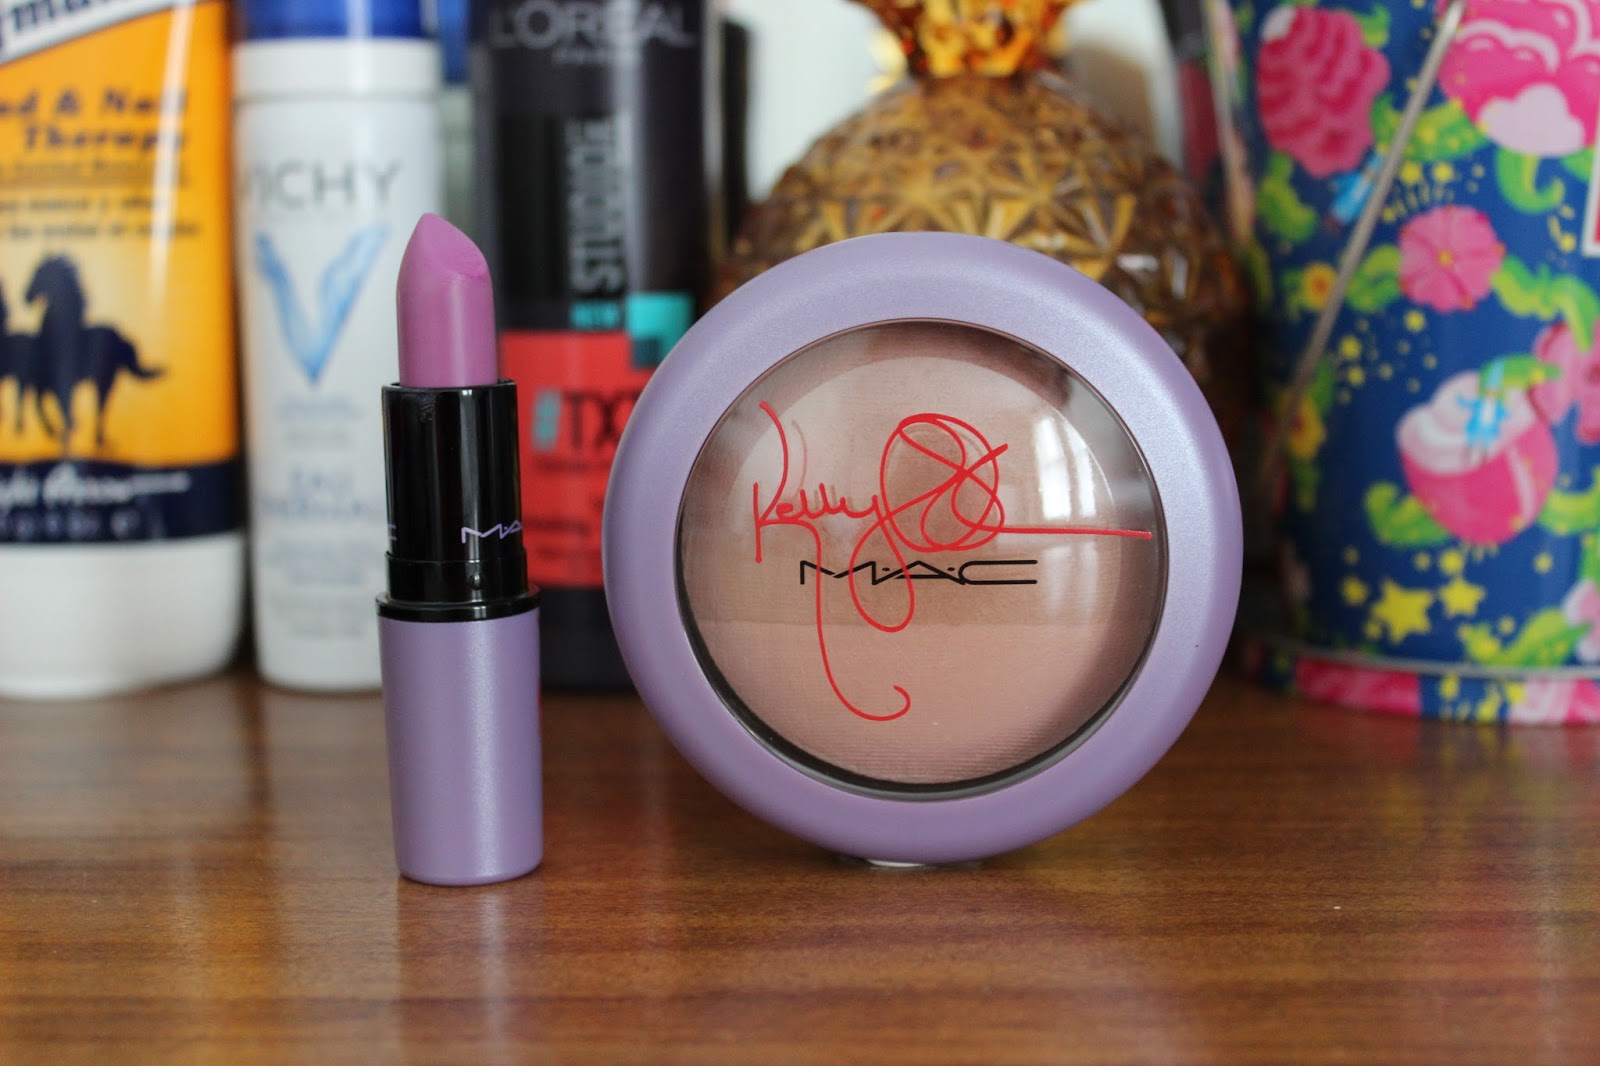 MAC Kelly Osbourne Dodgy Girl lipstick and mineralise skin finish